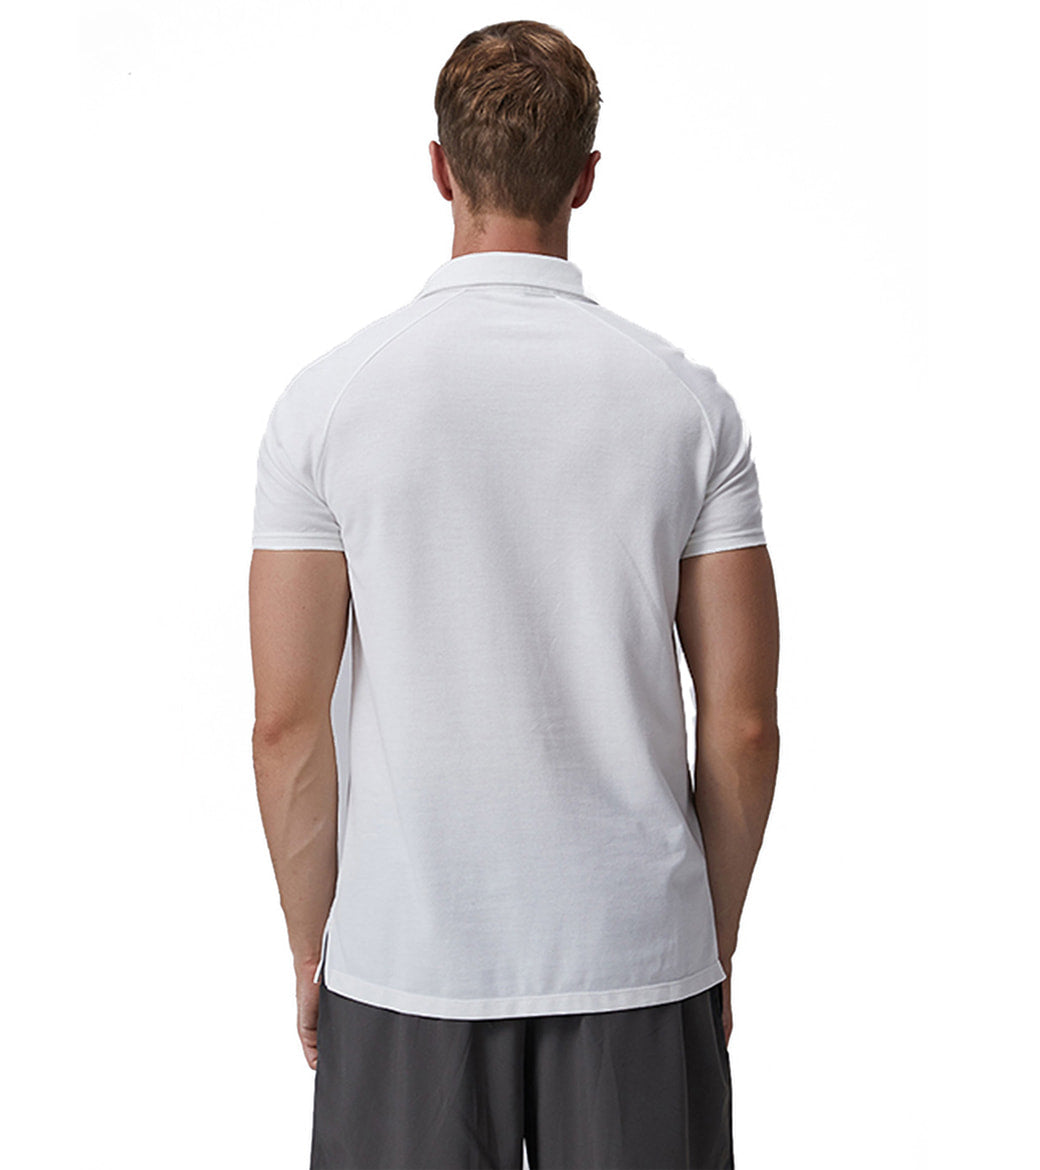 LOVESOFT Men's Fitness Running Yoga T-Shirts